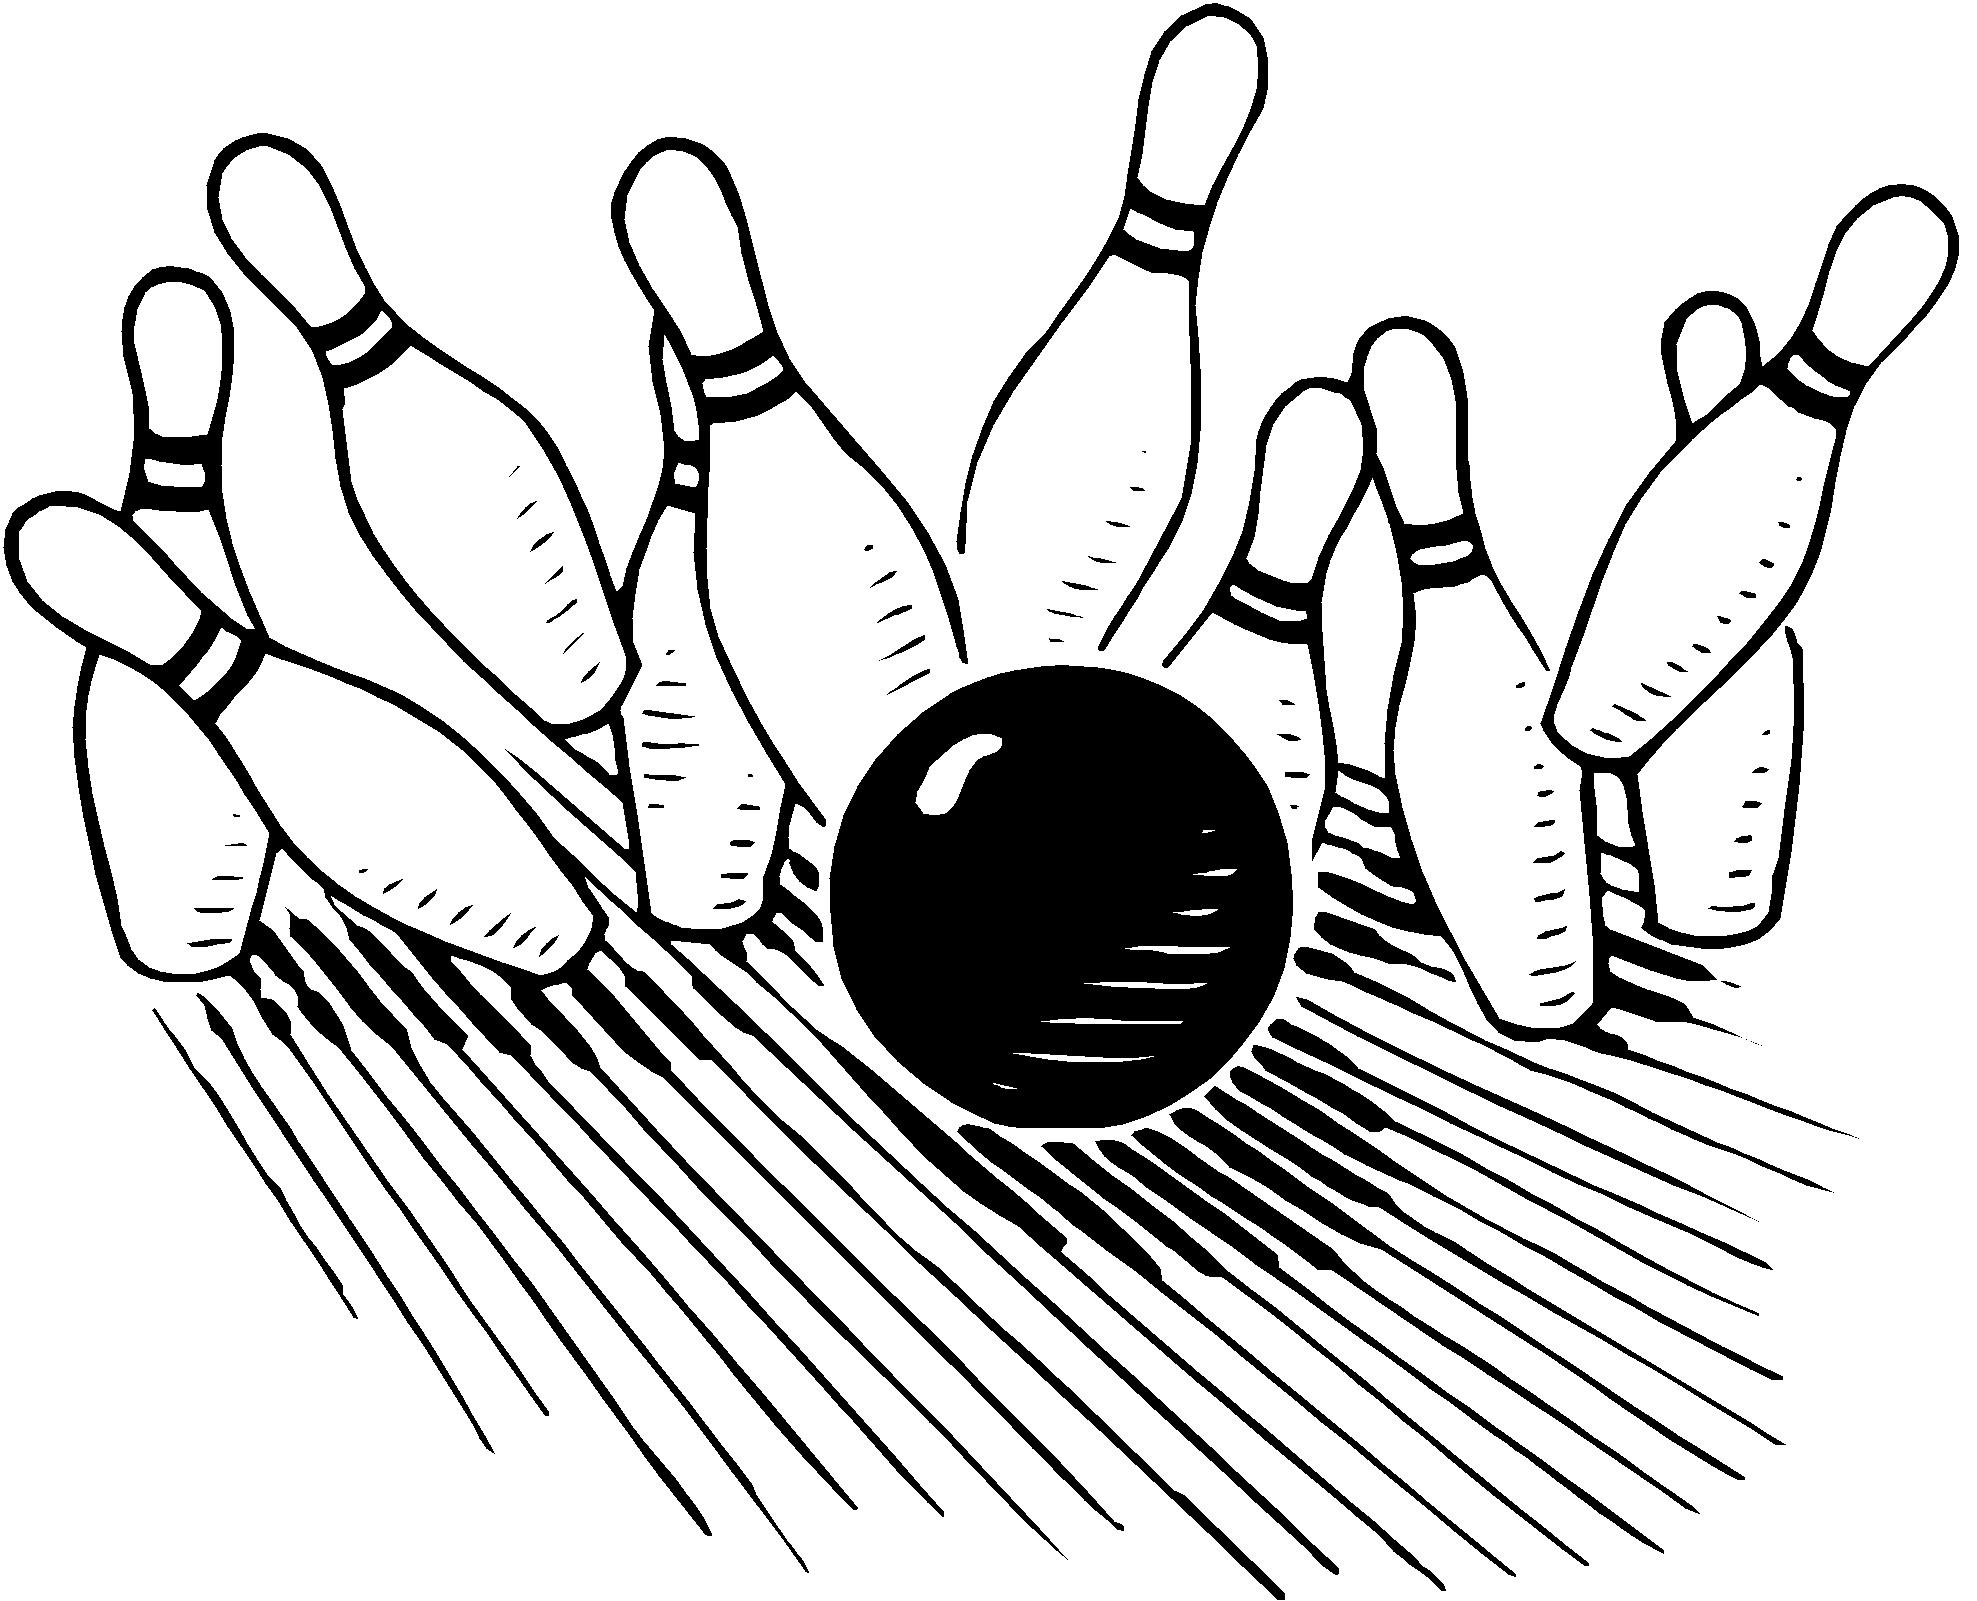 Bowling ball bowling clipart image clip art 4